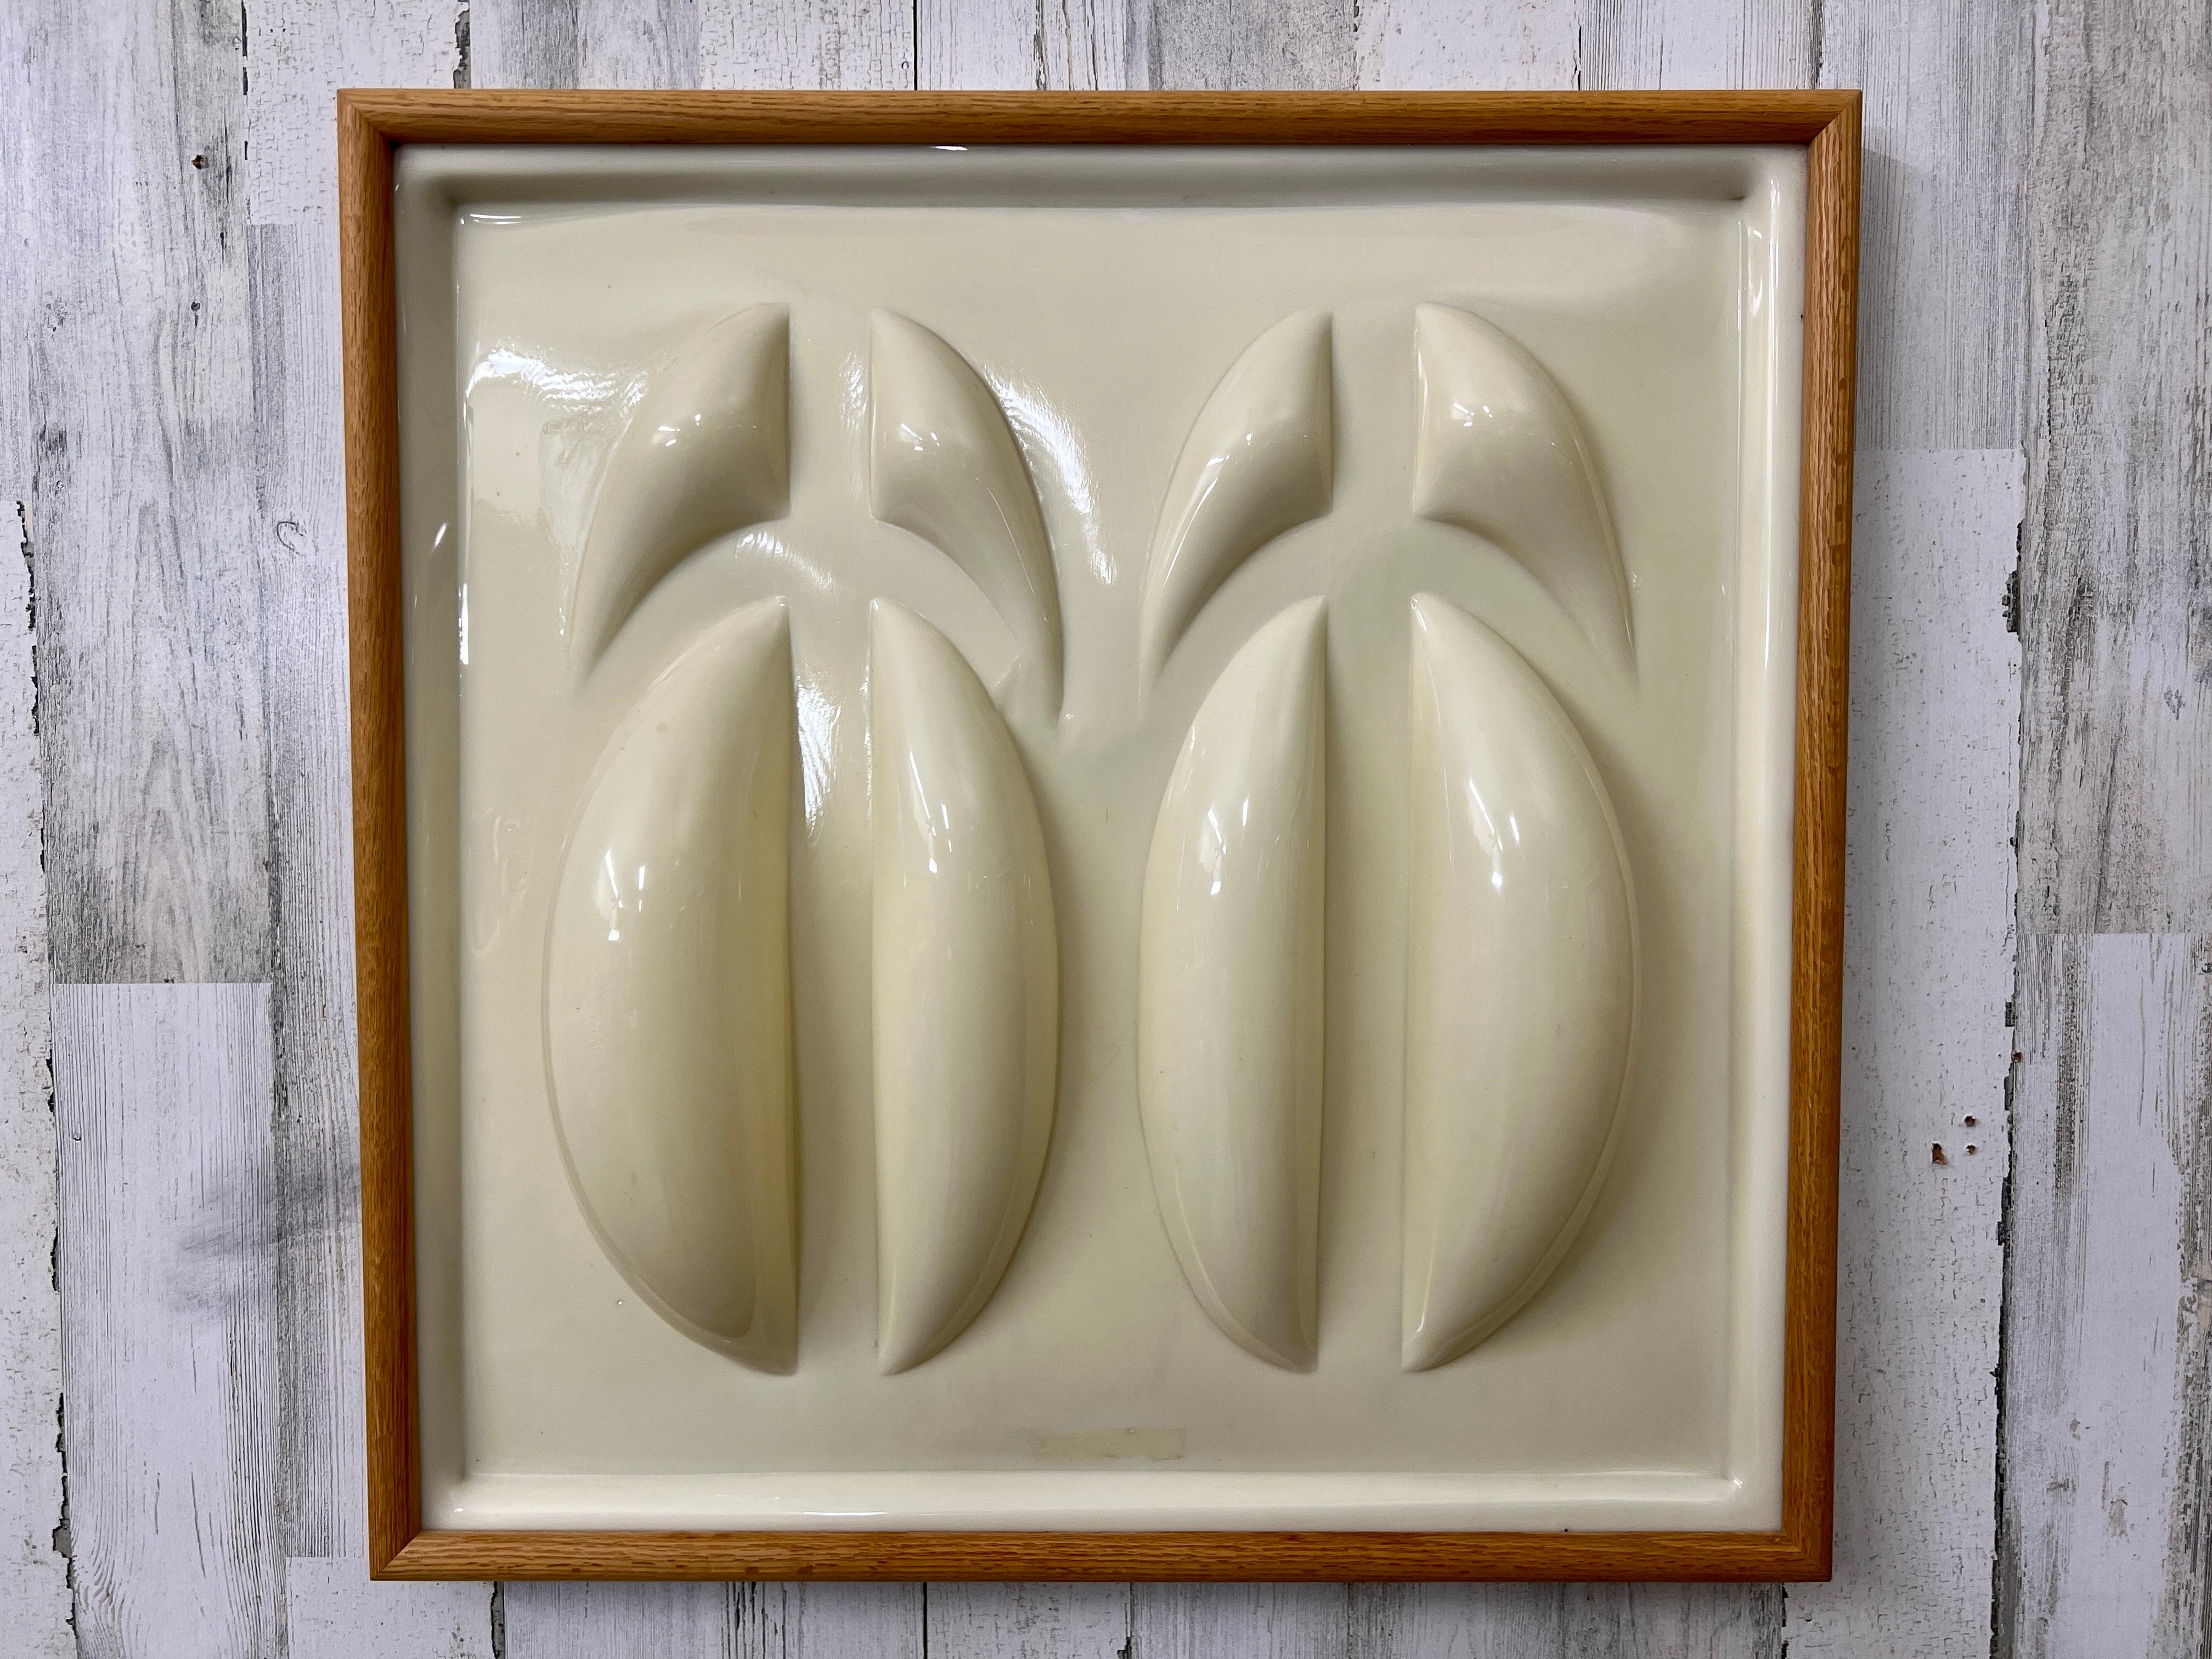 Oak framed with molded plastic Pop art design.